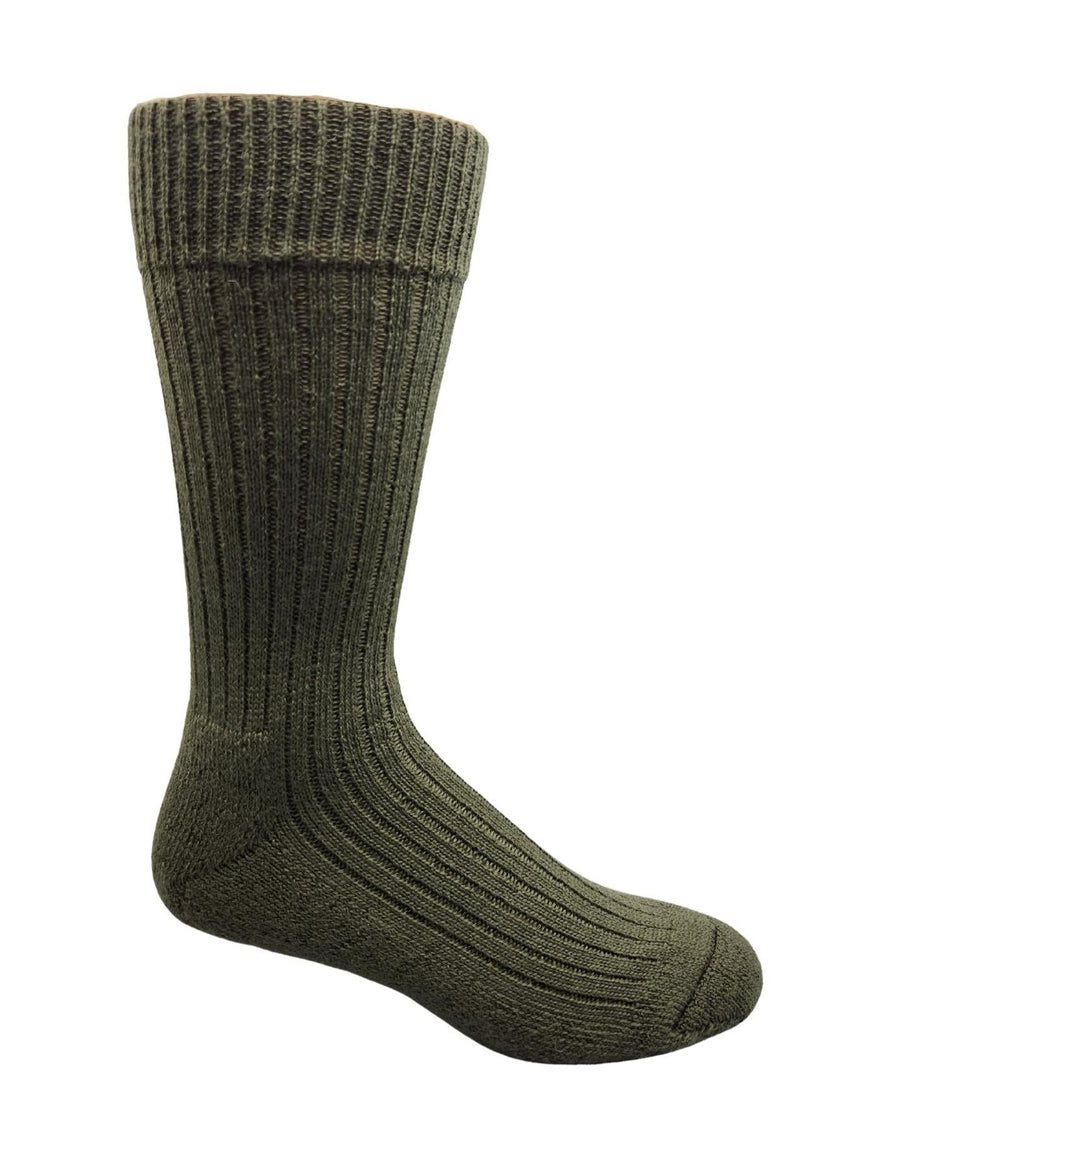 Odd Sox Unisex Crew Novelty Socks, Big Bank, One Size – Sock Annex